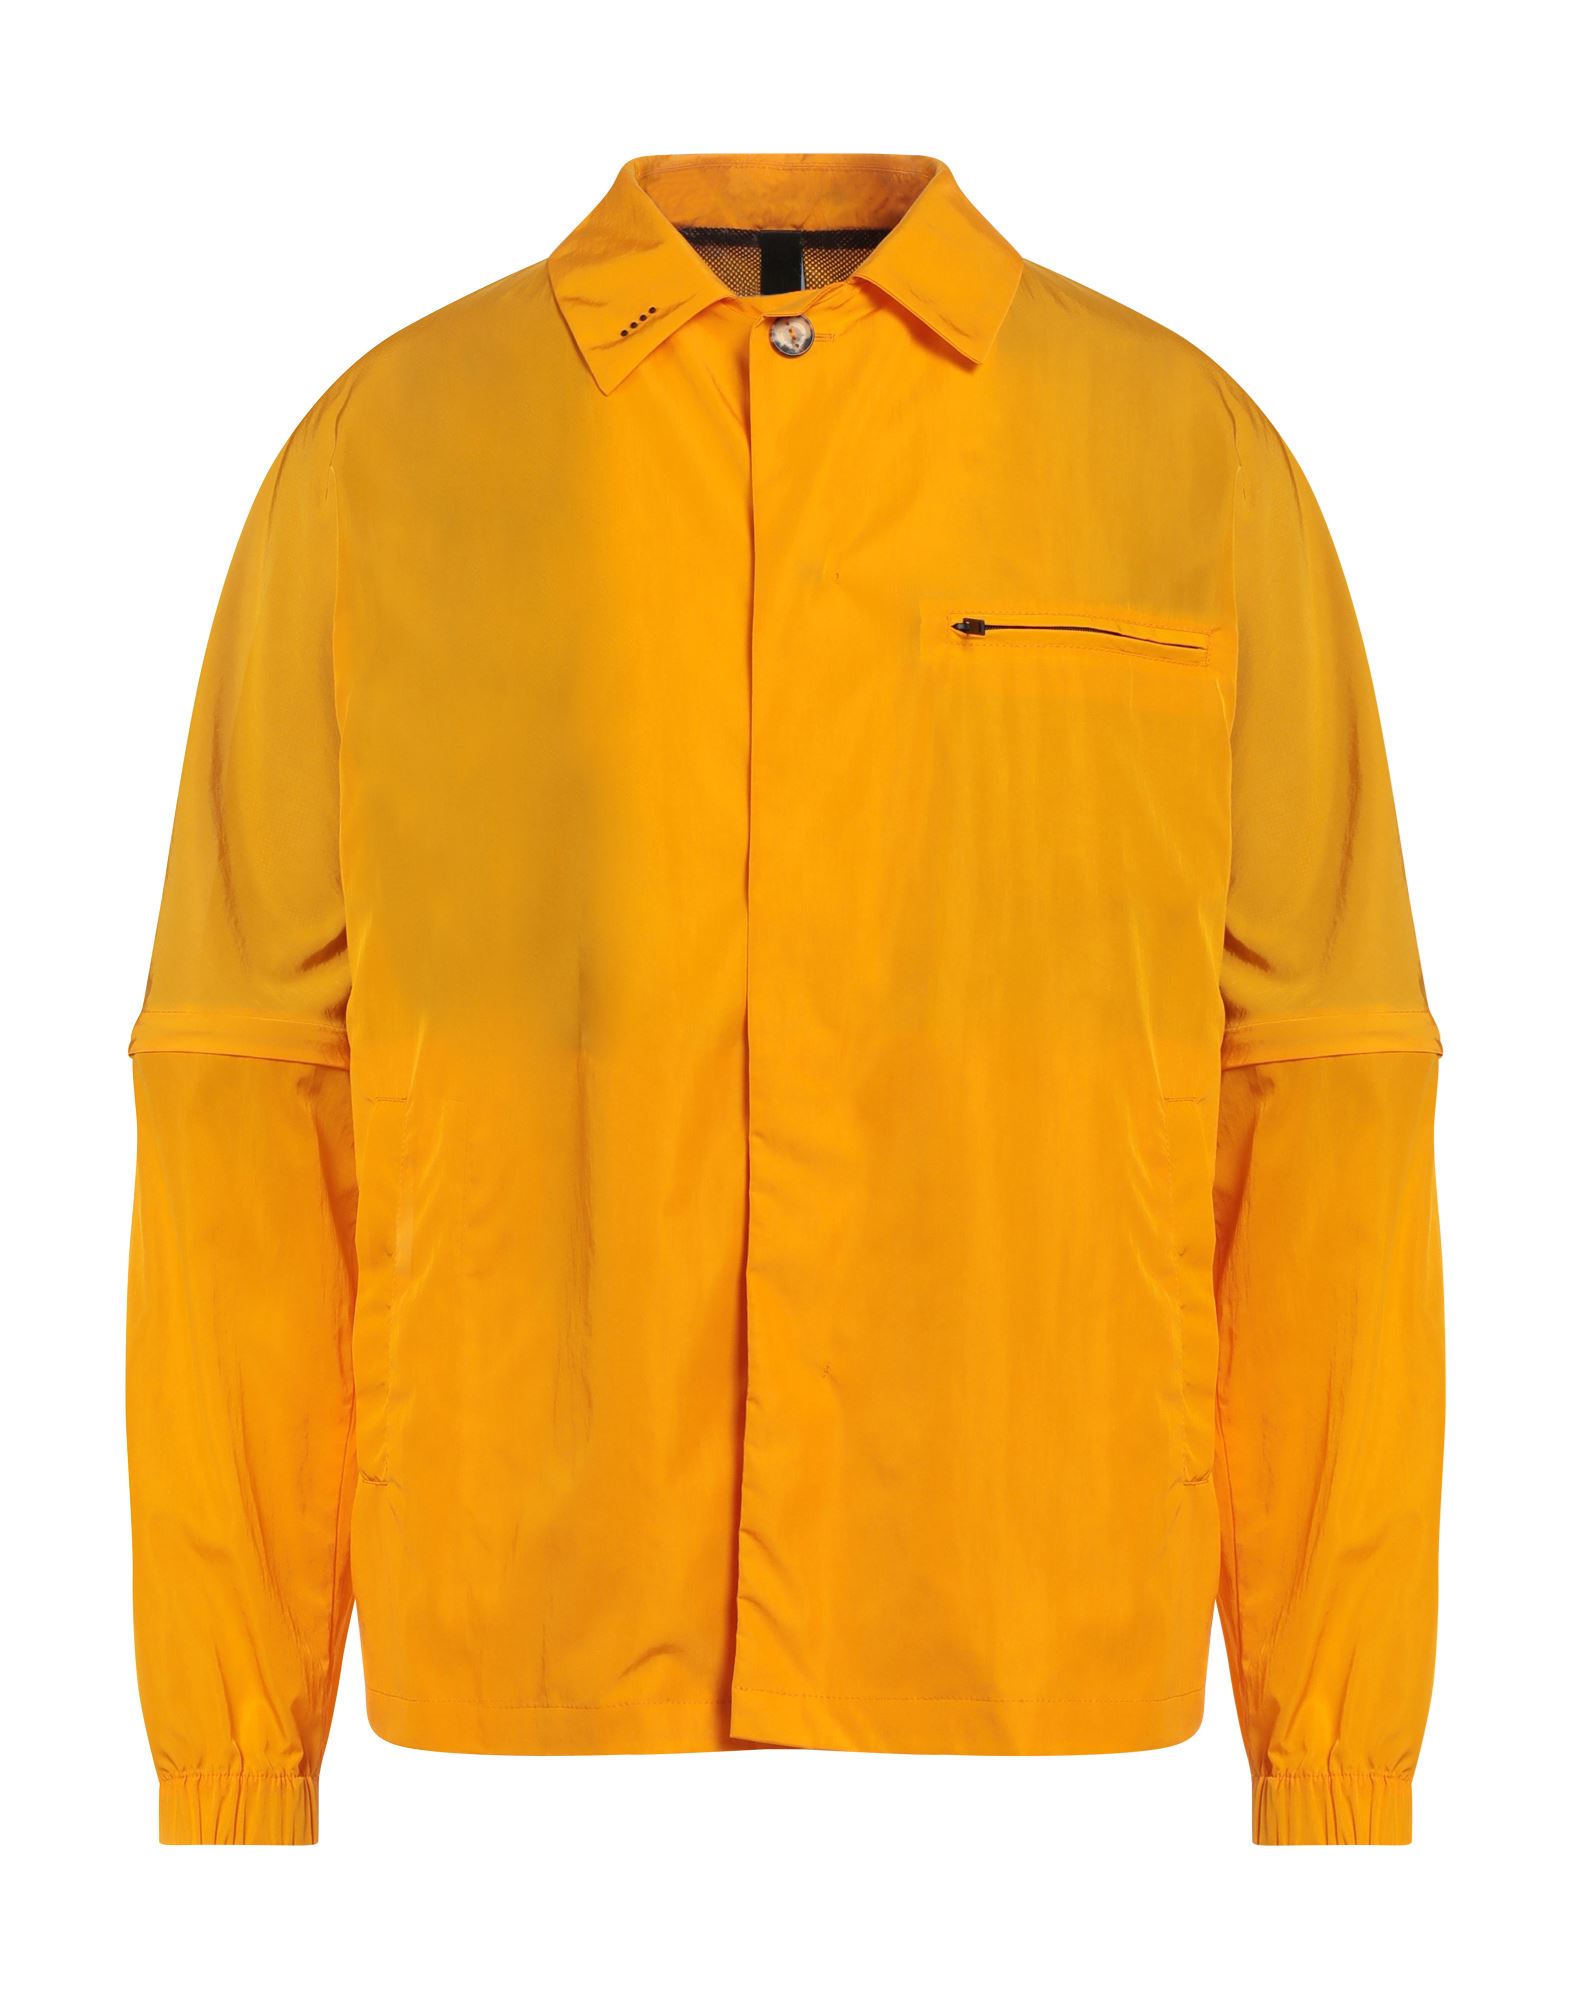 Hevo Jackets In Orange